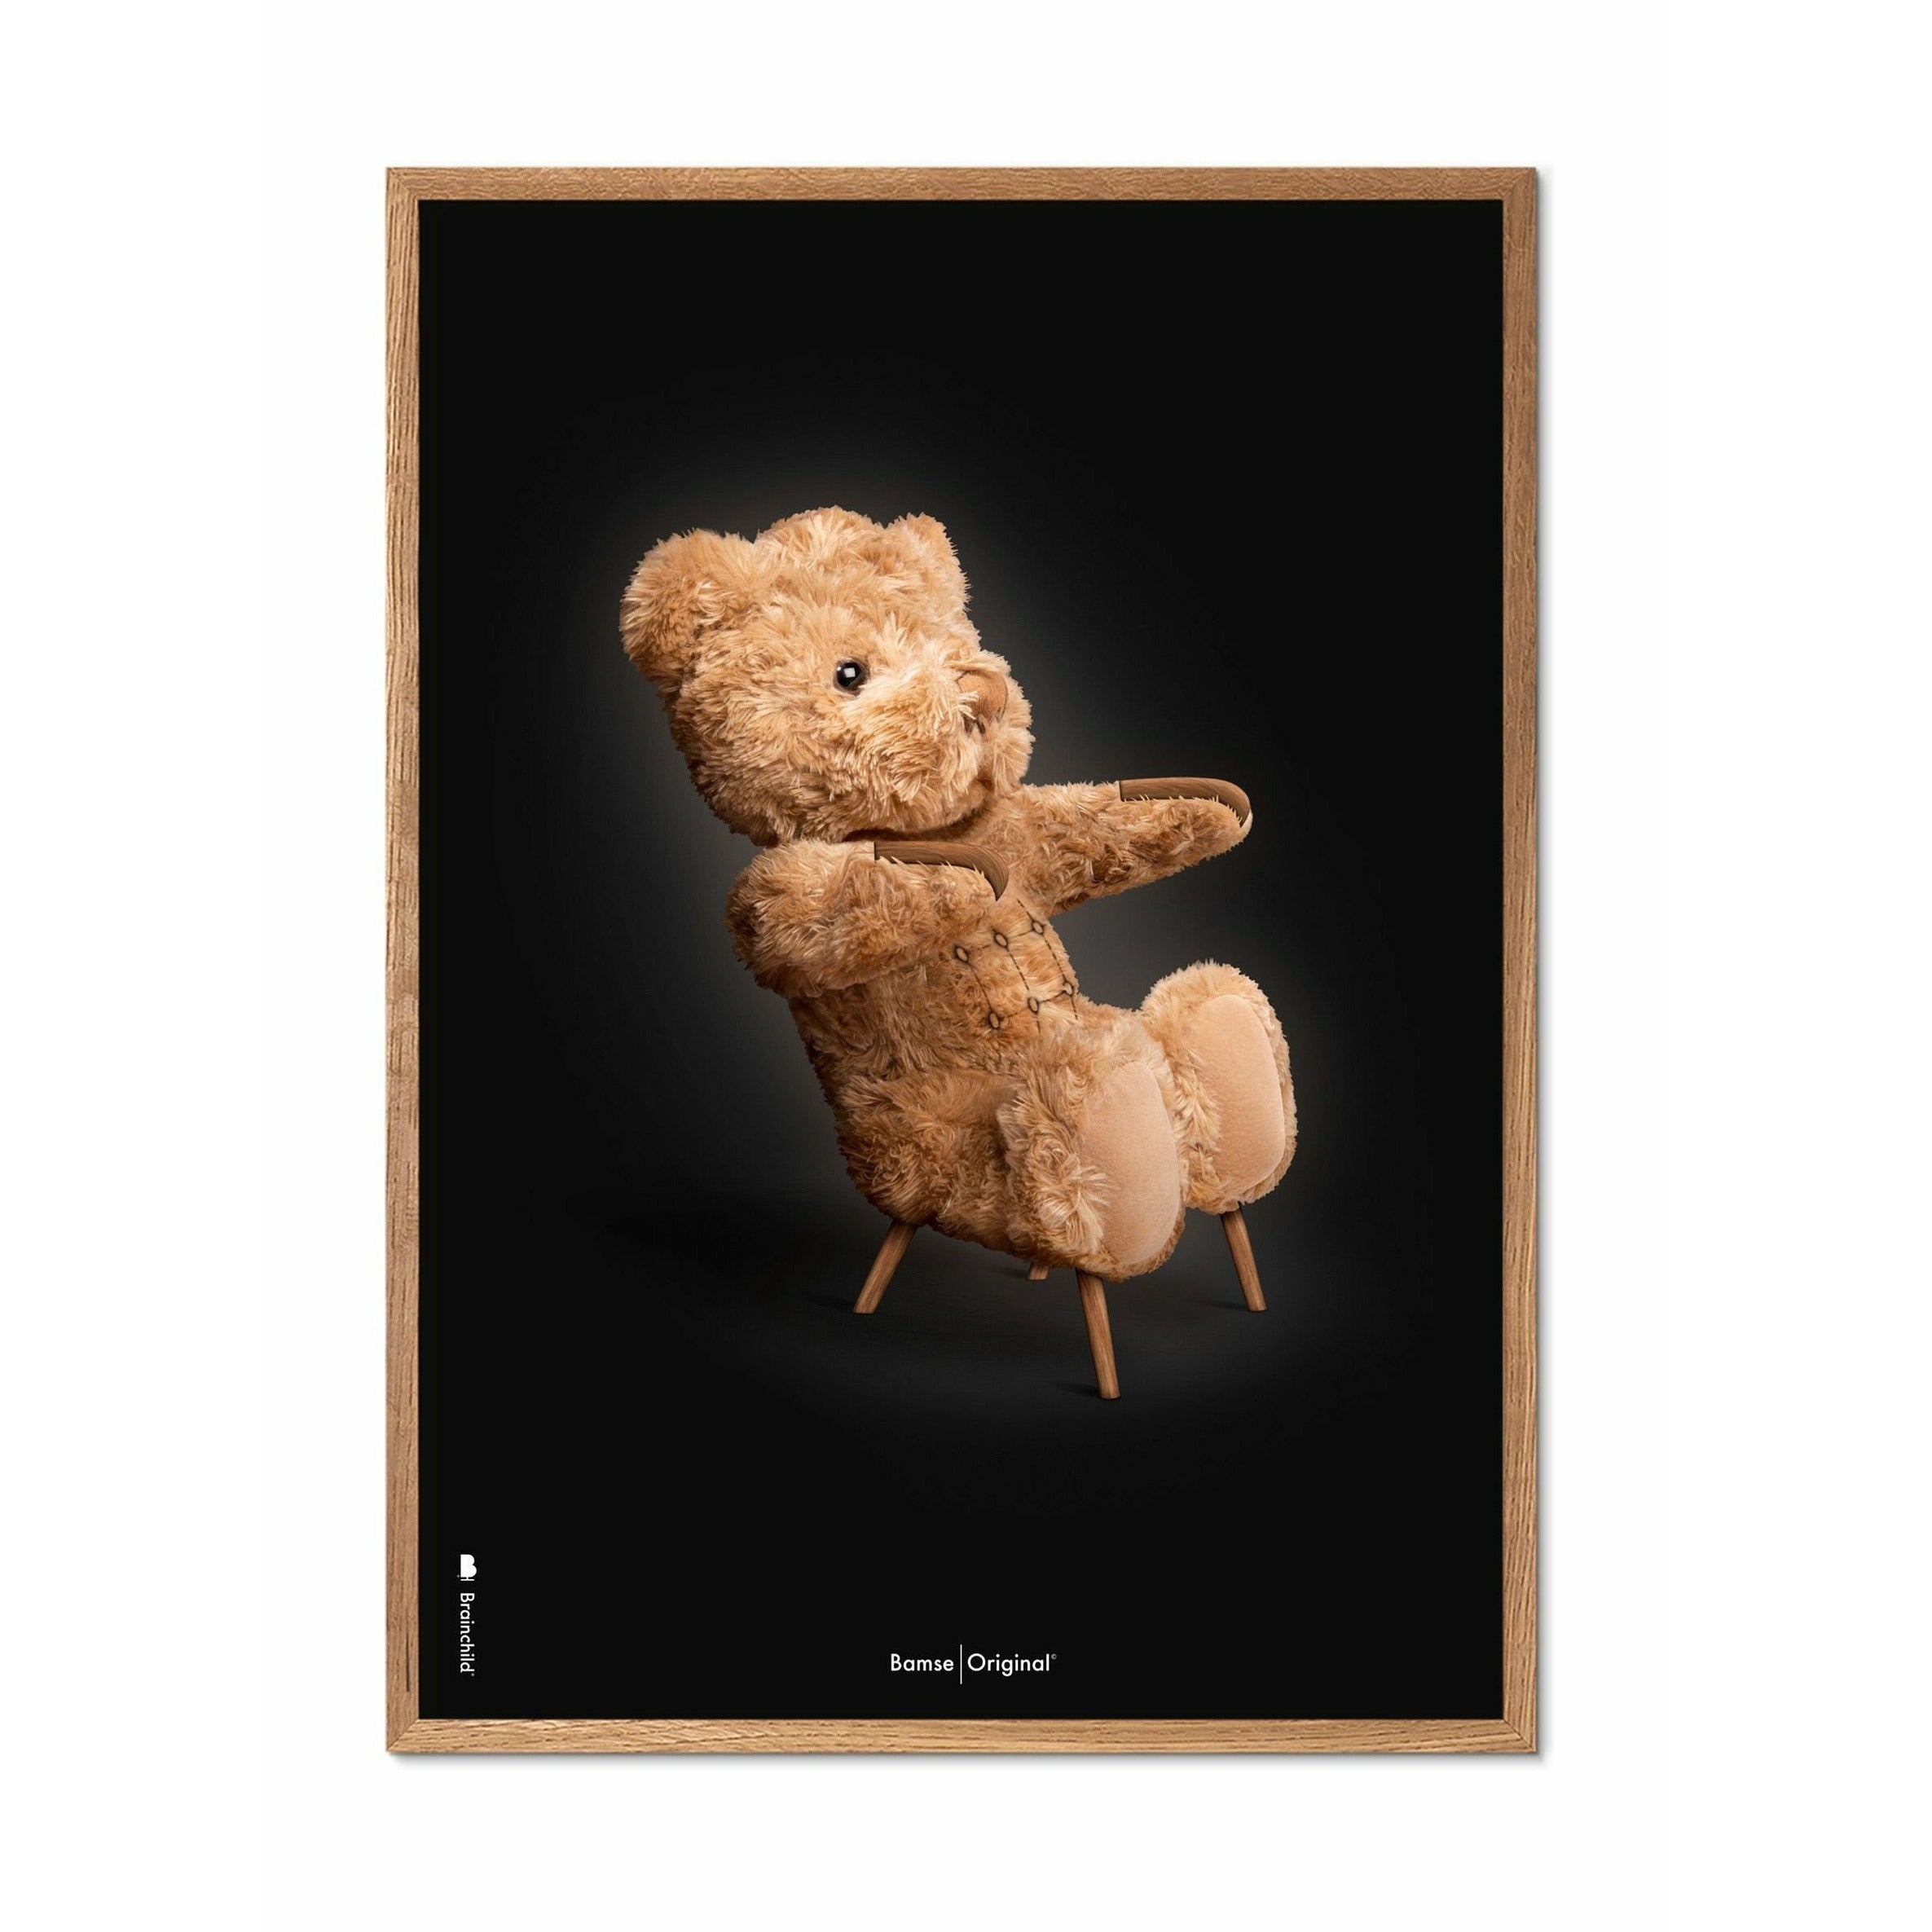 Brainchild Teddy Bear Classic Poster, Frame Made Of Light Wood 50x70 Cm, Black Background